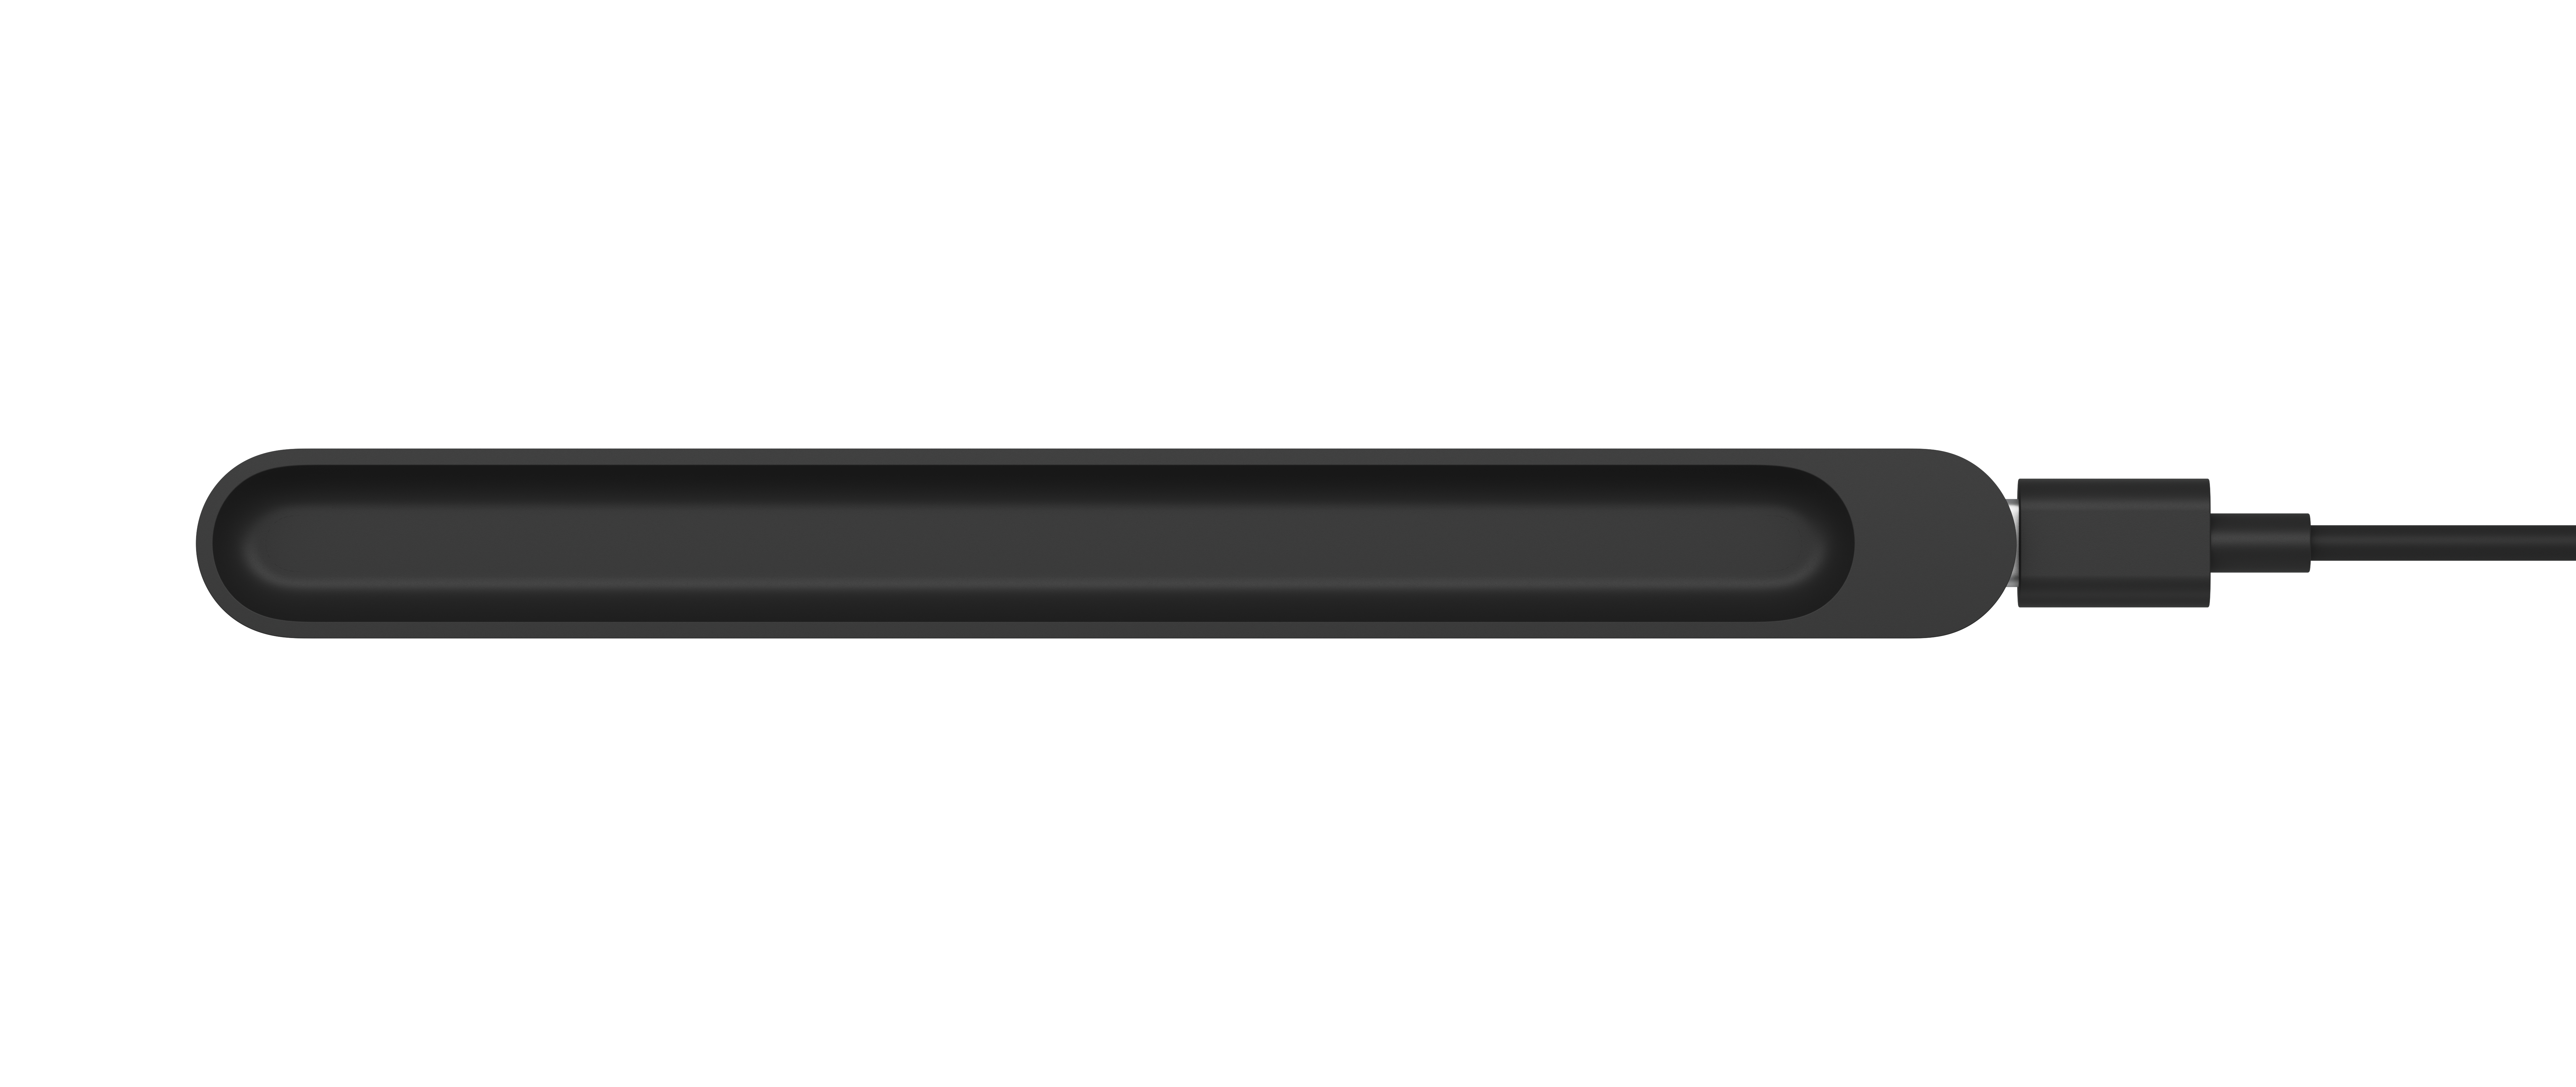 MS Surface Slim Pen Charger Black